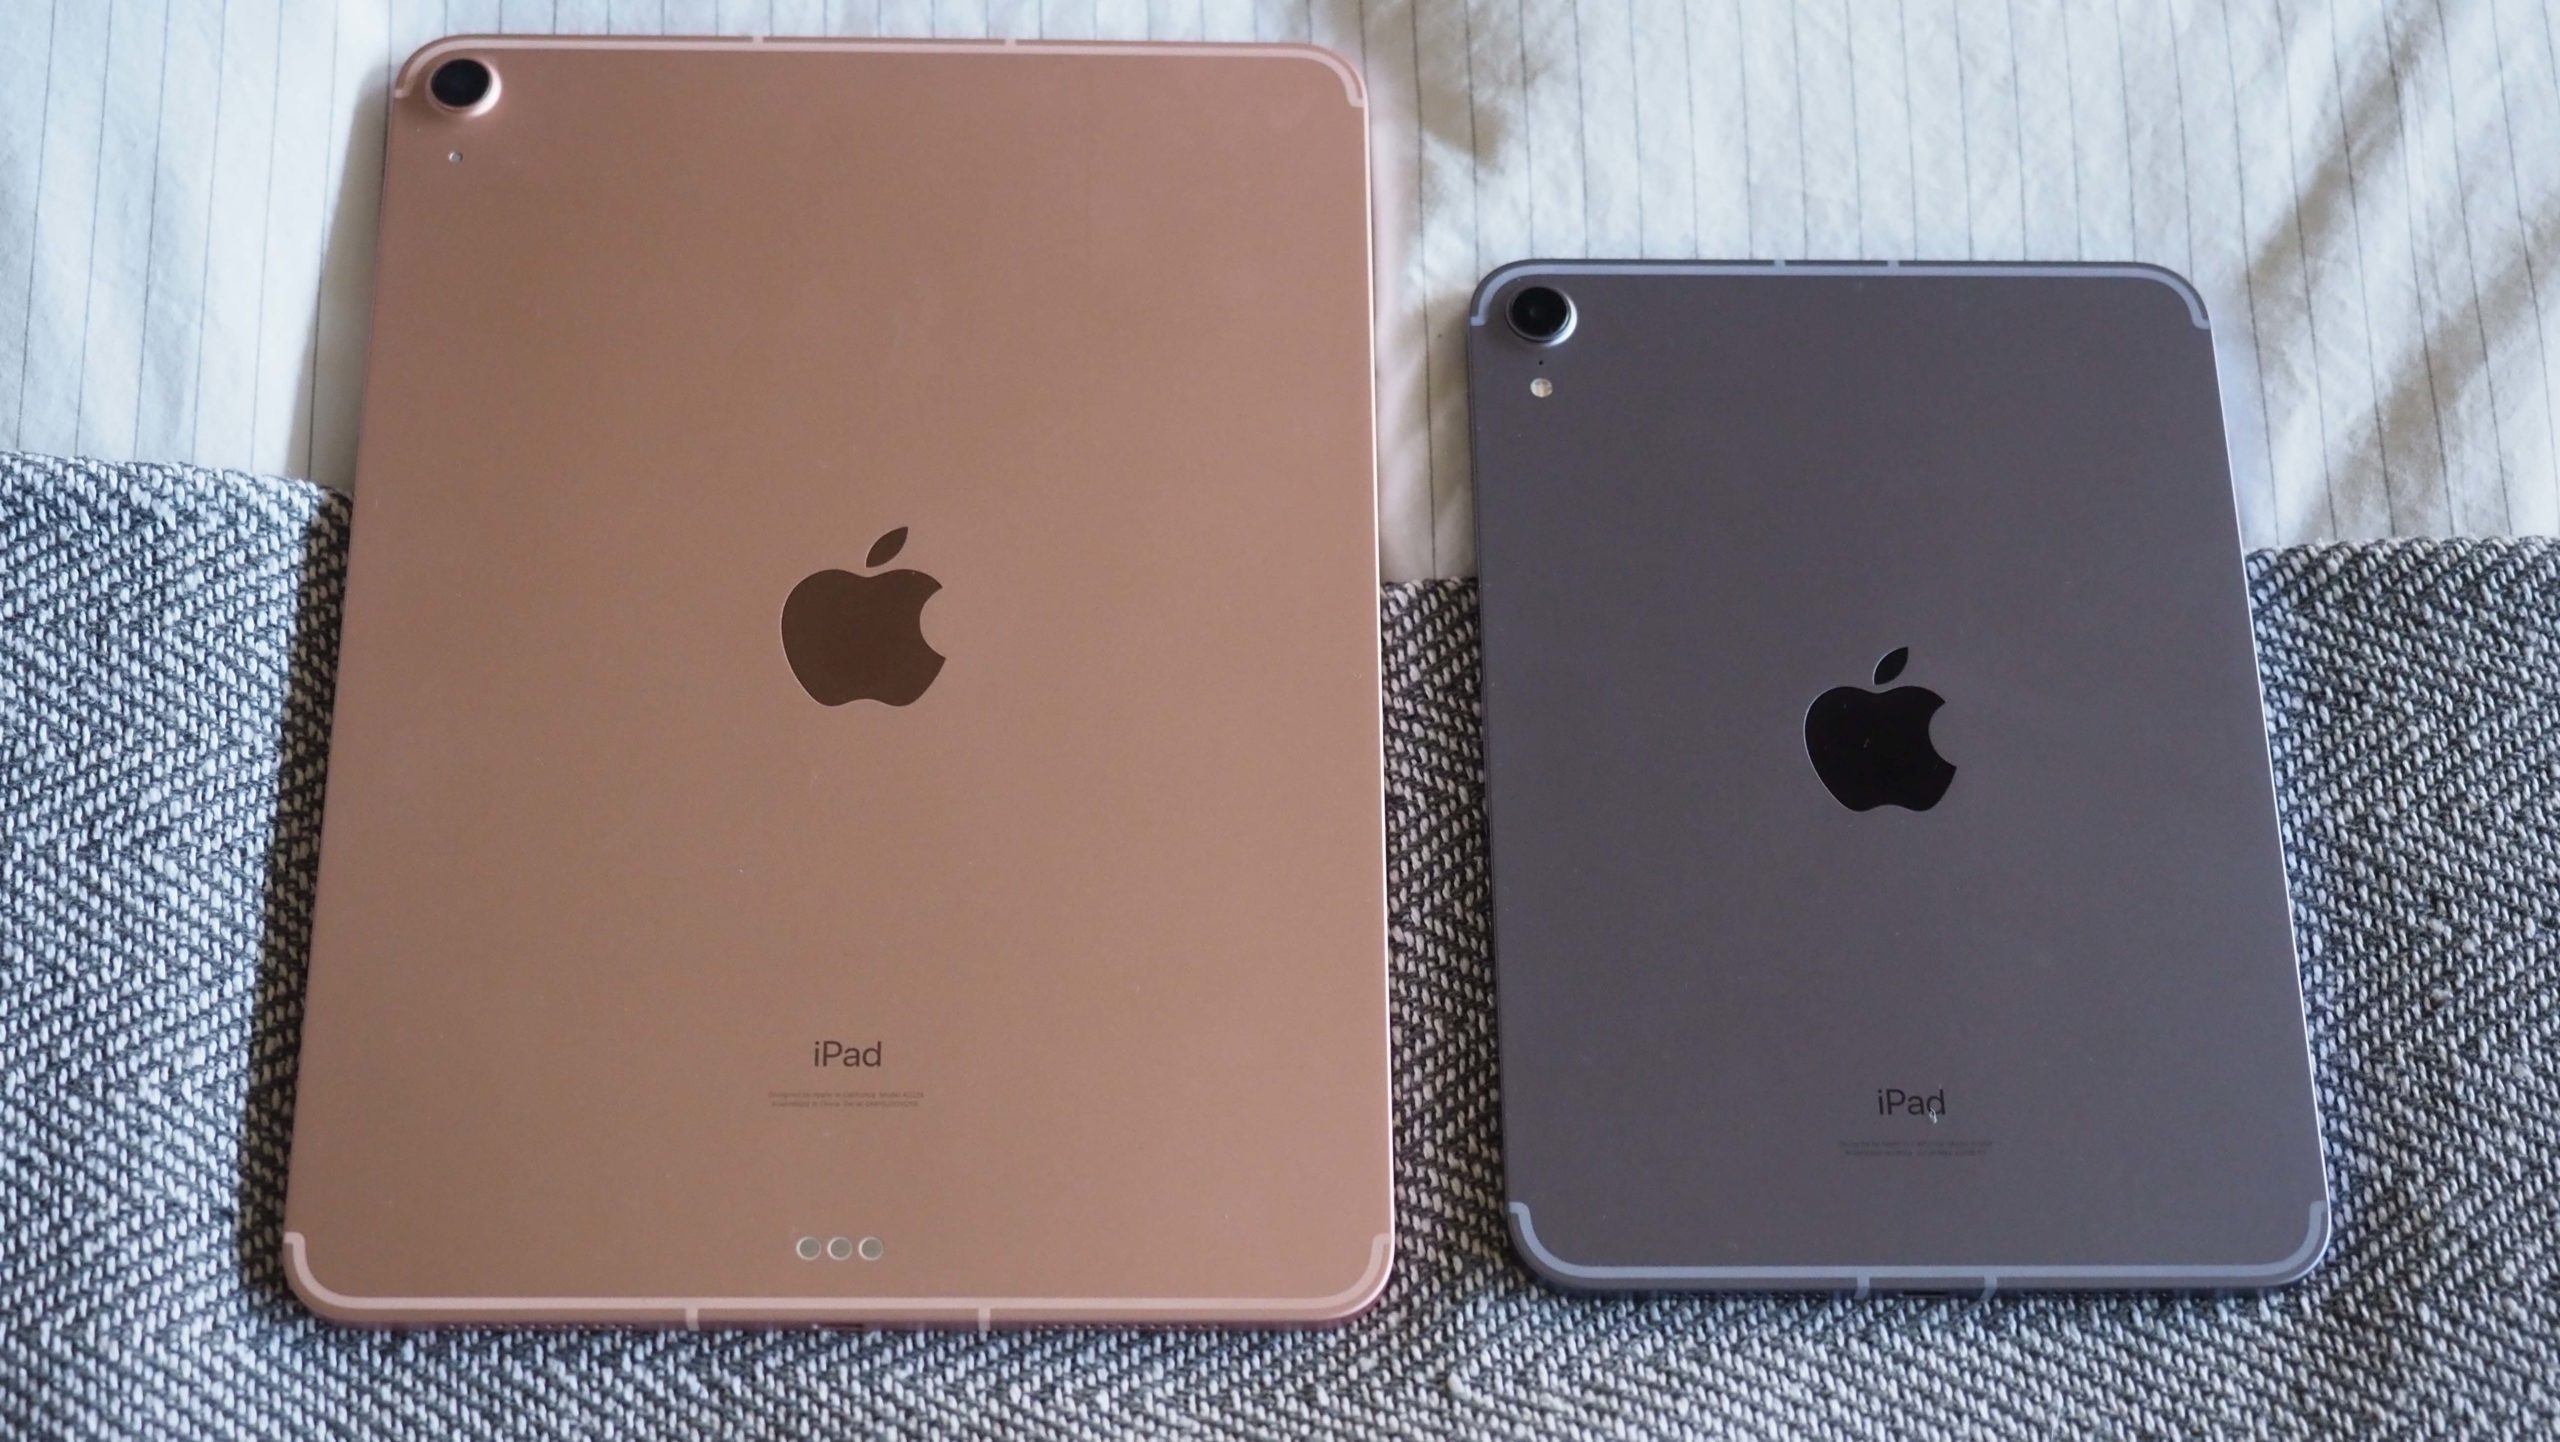 iPad Air (left) and iPad Mini (right) are lopsided peas in a pod. (Photo: Caitlin McGarry/Gizmodo)